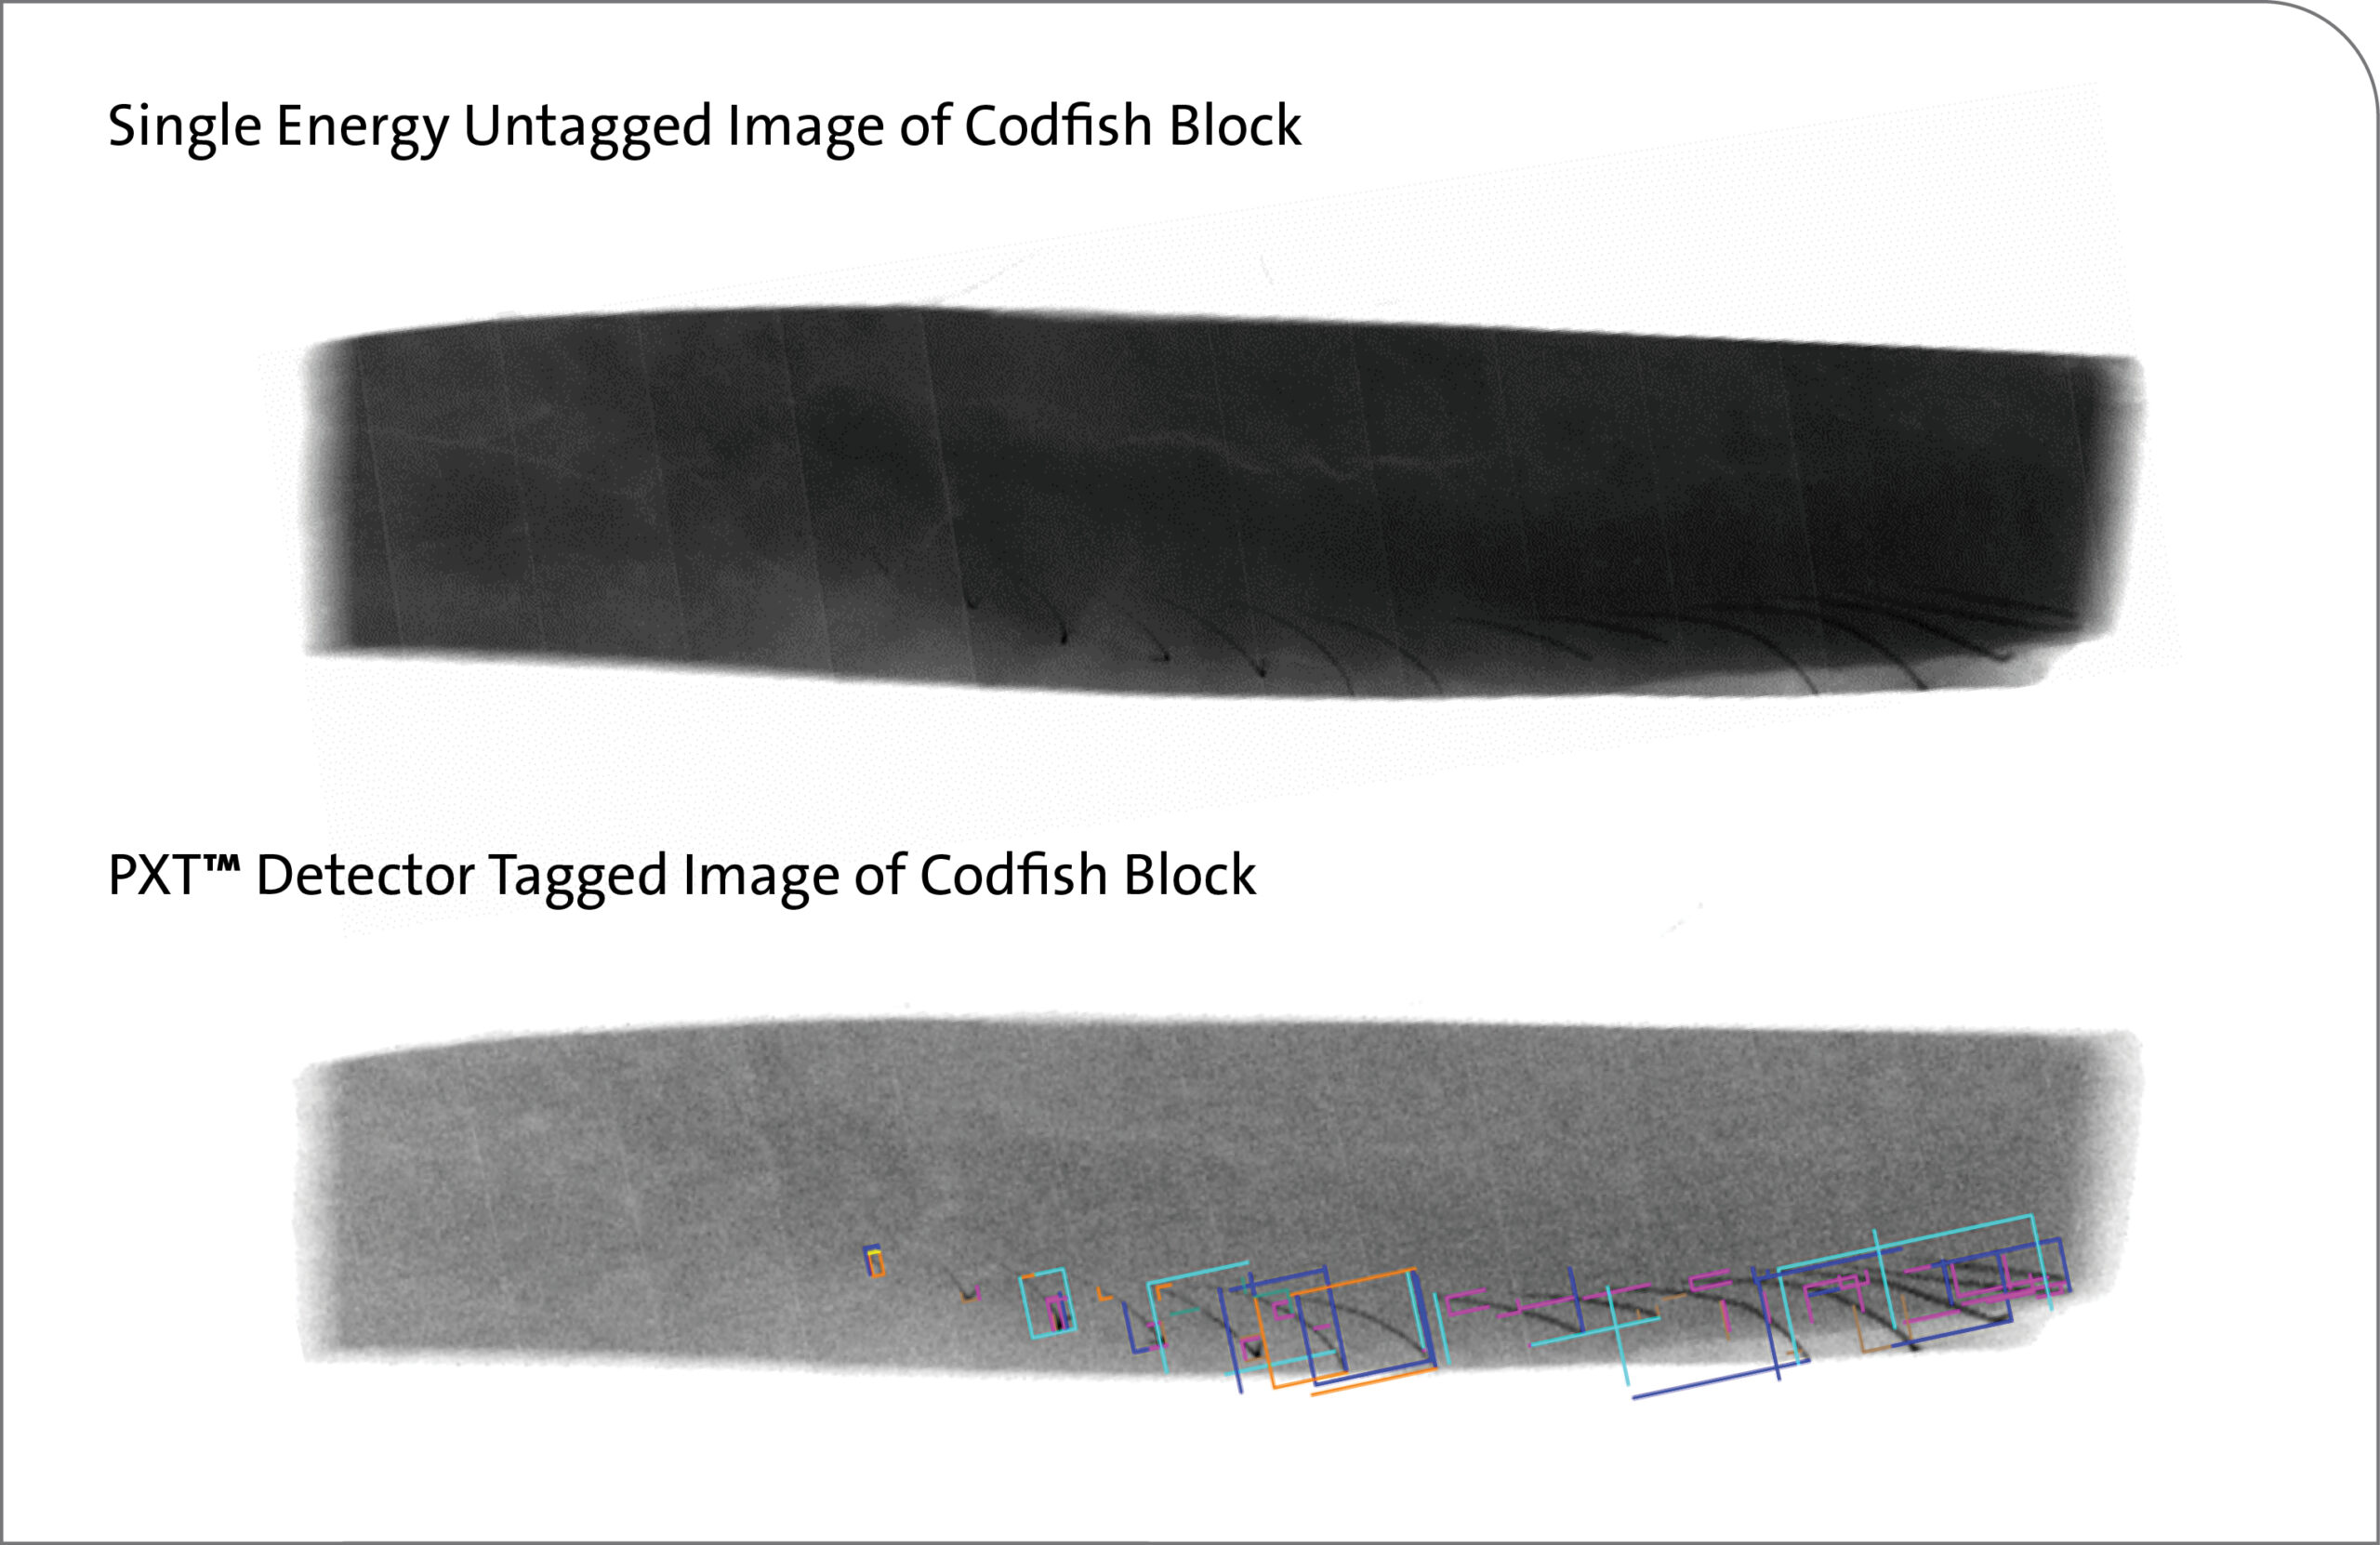 Single Energy & PXT Detector Image of Codfish Block